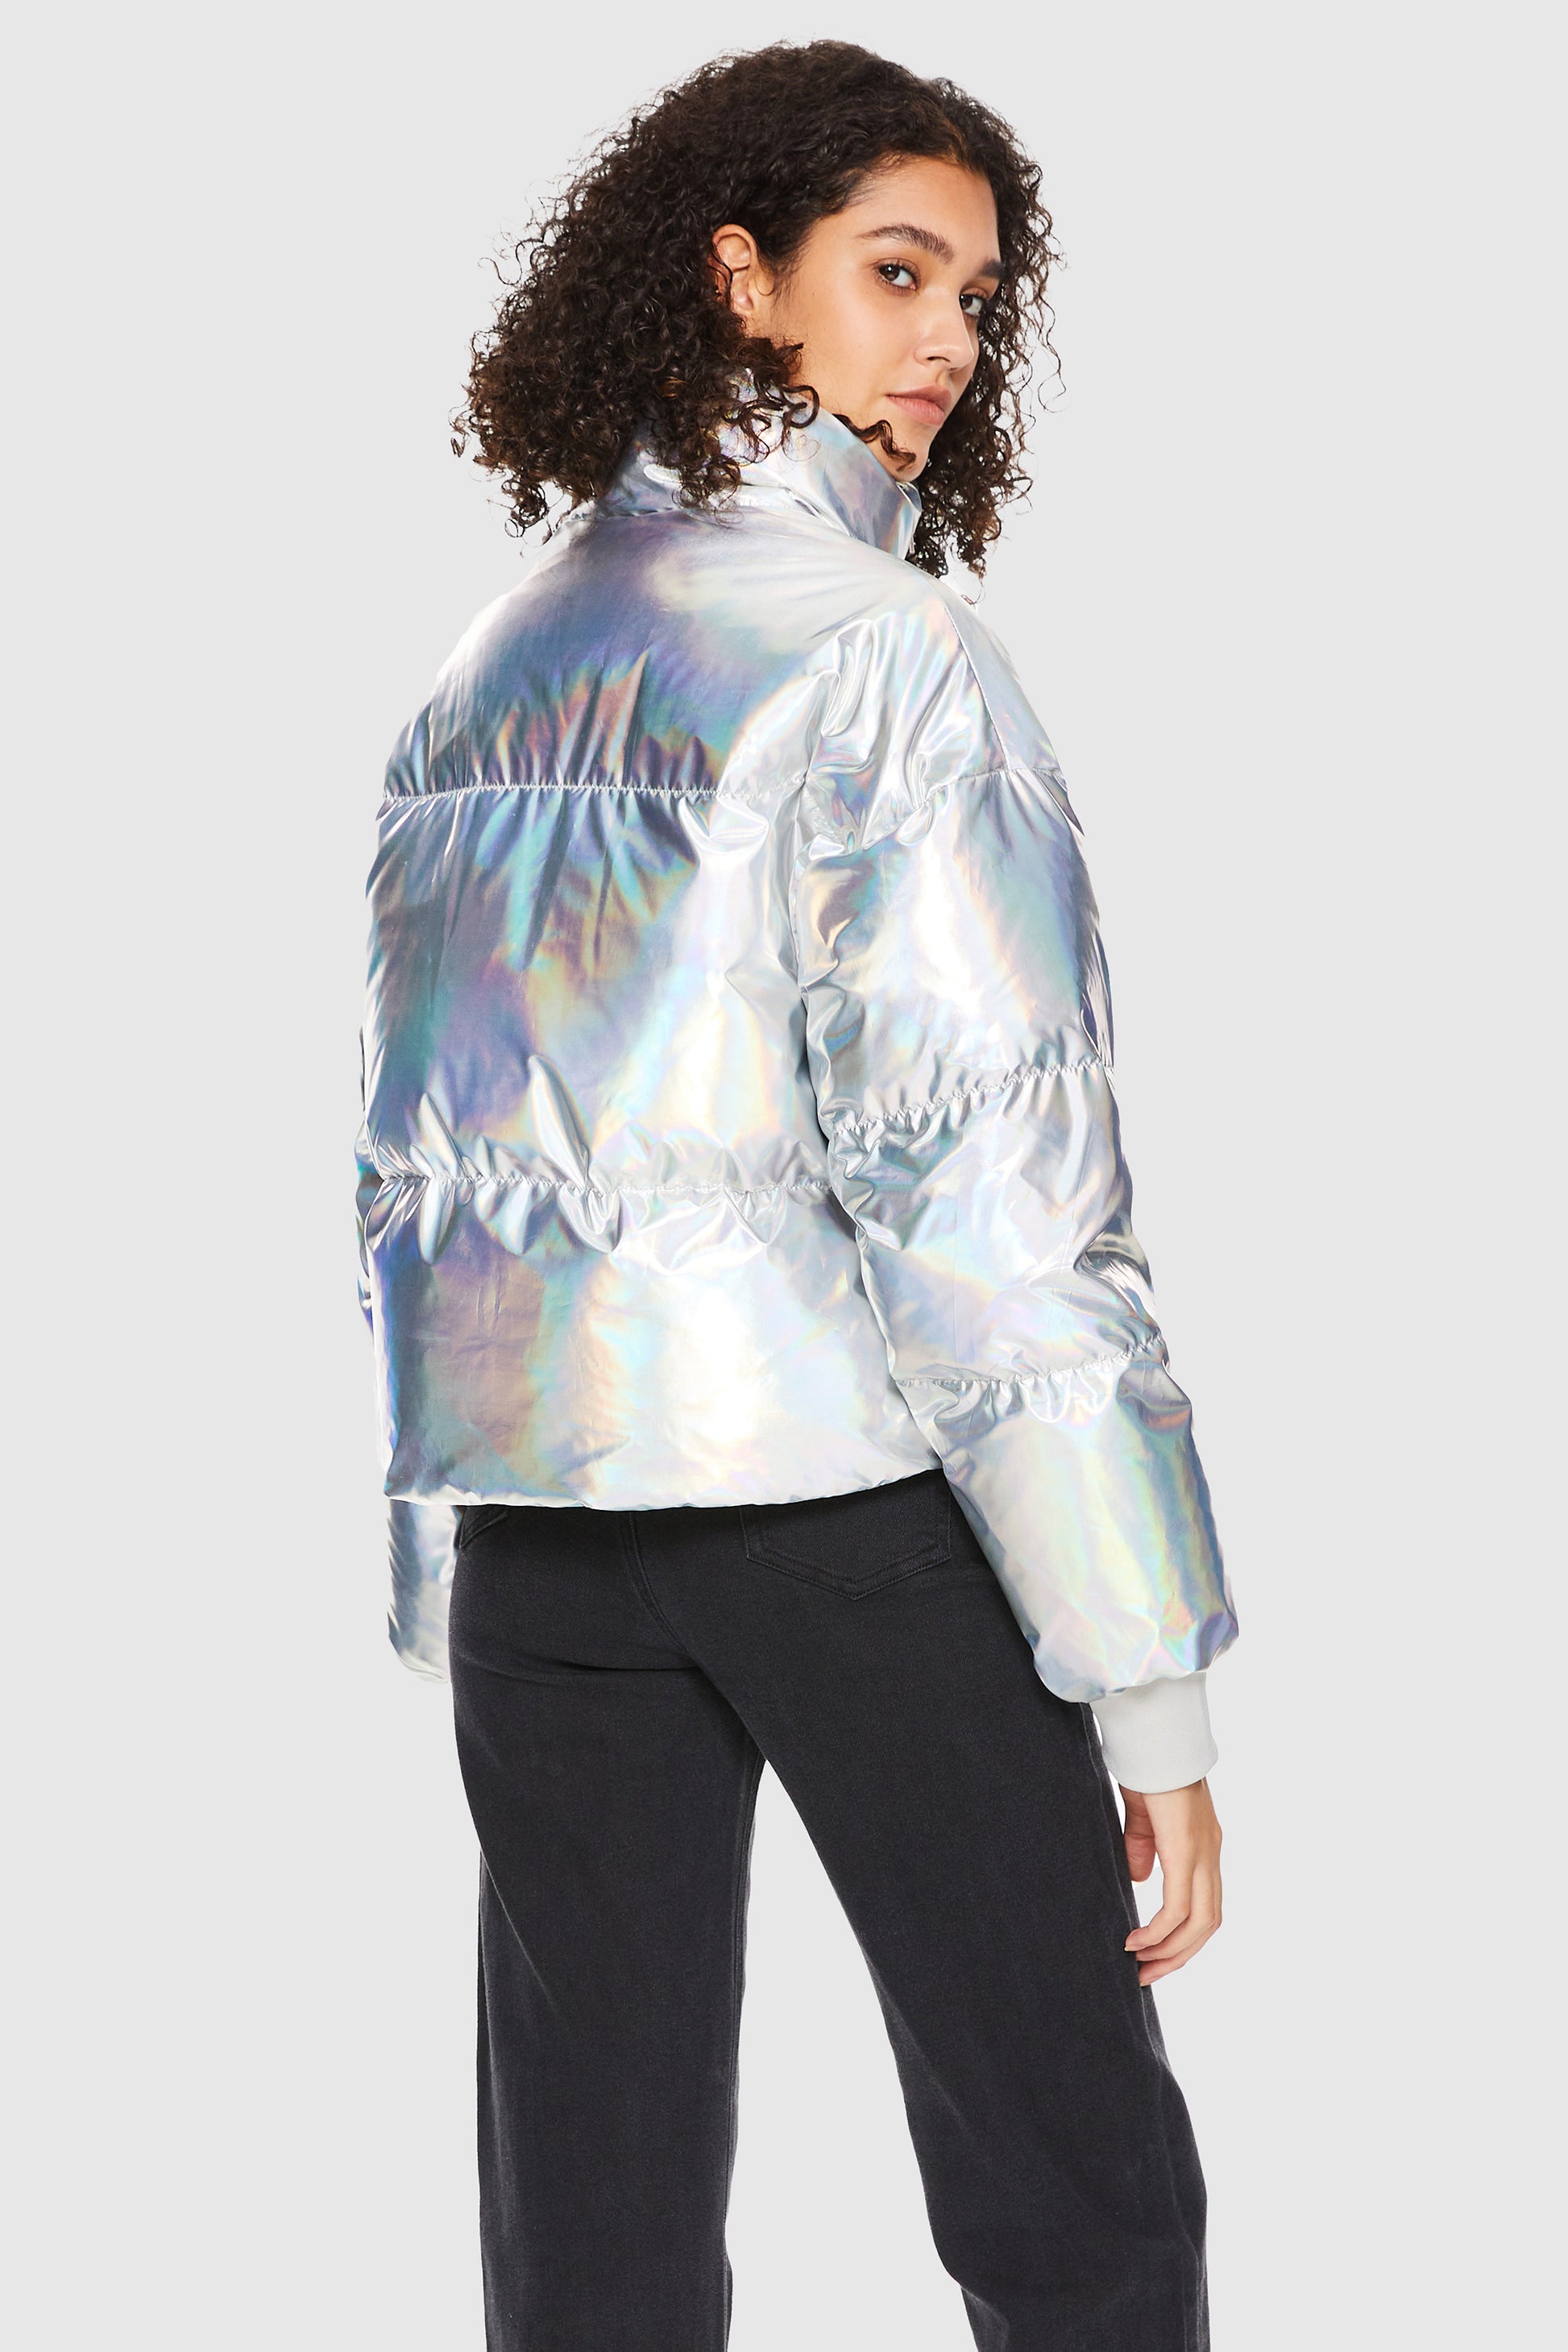 Orolay Mirror Silver Shiny Puffer Jacket Metallic Silver / M